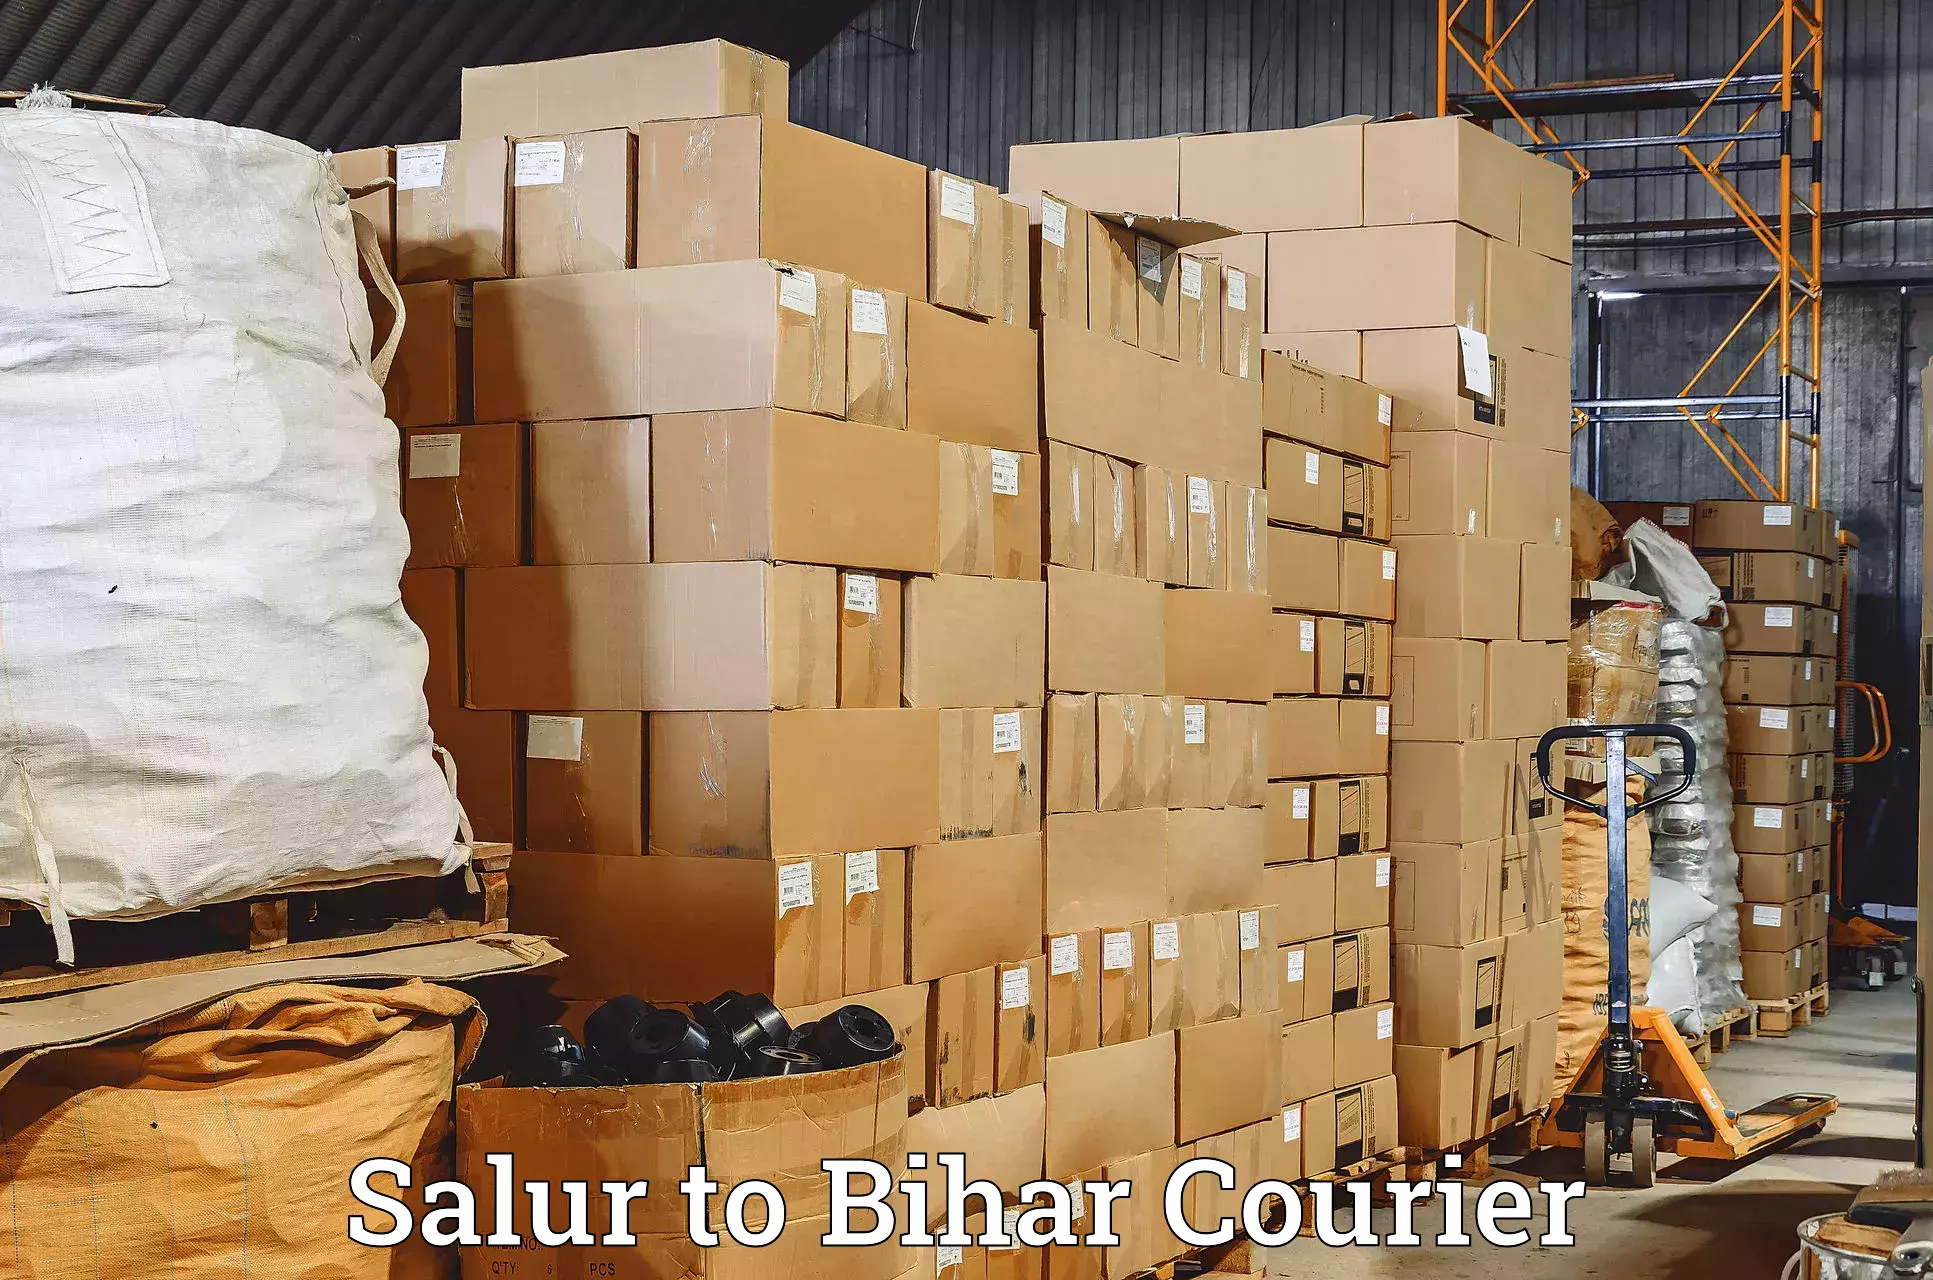 24-hour courier service Salur to Bihar